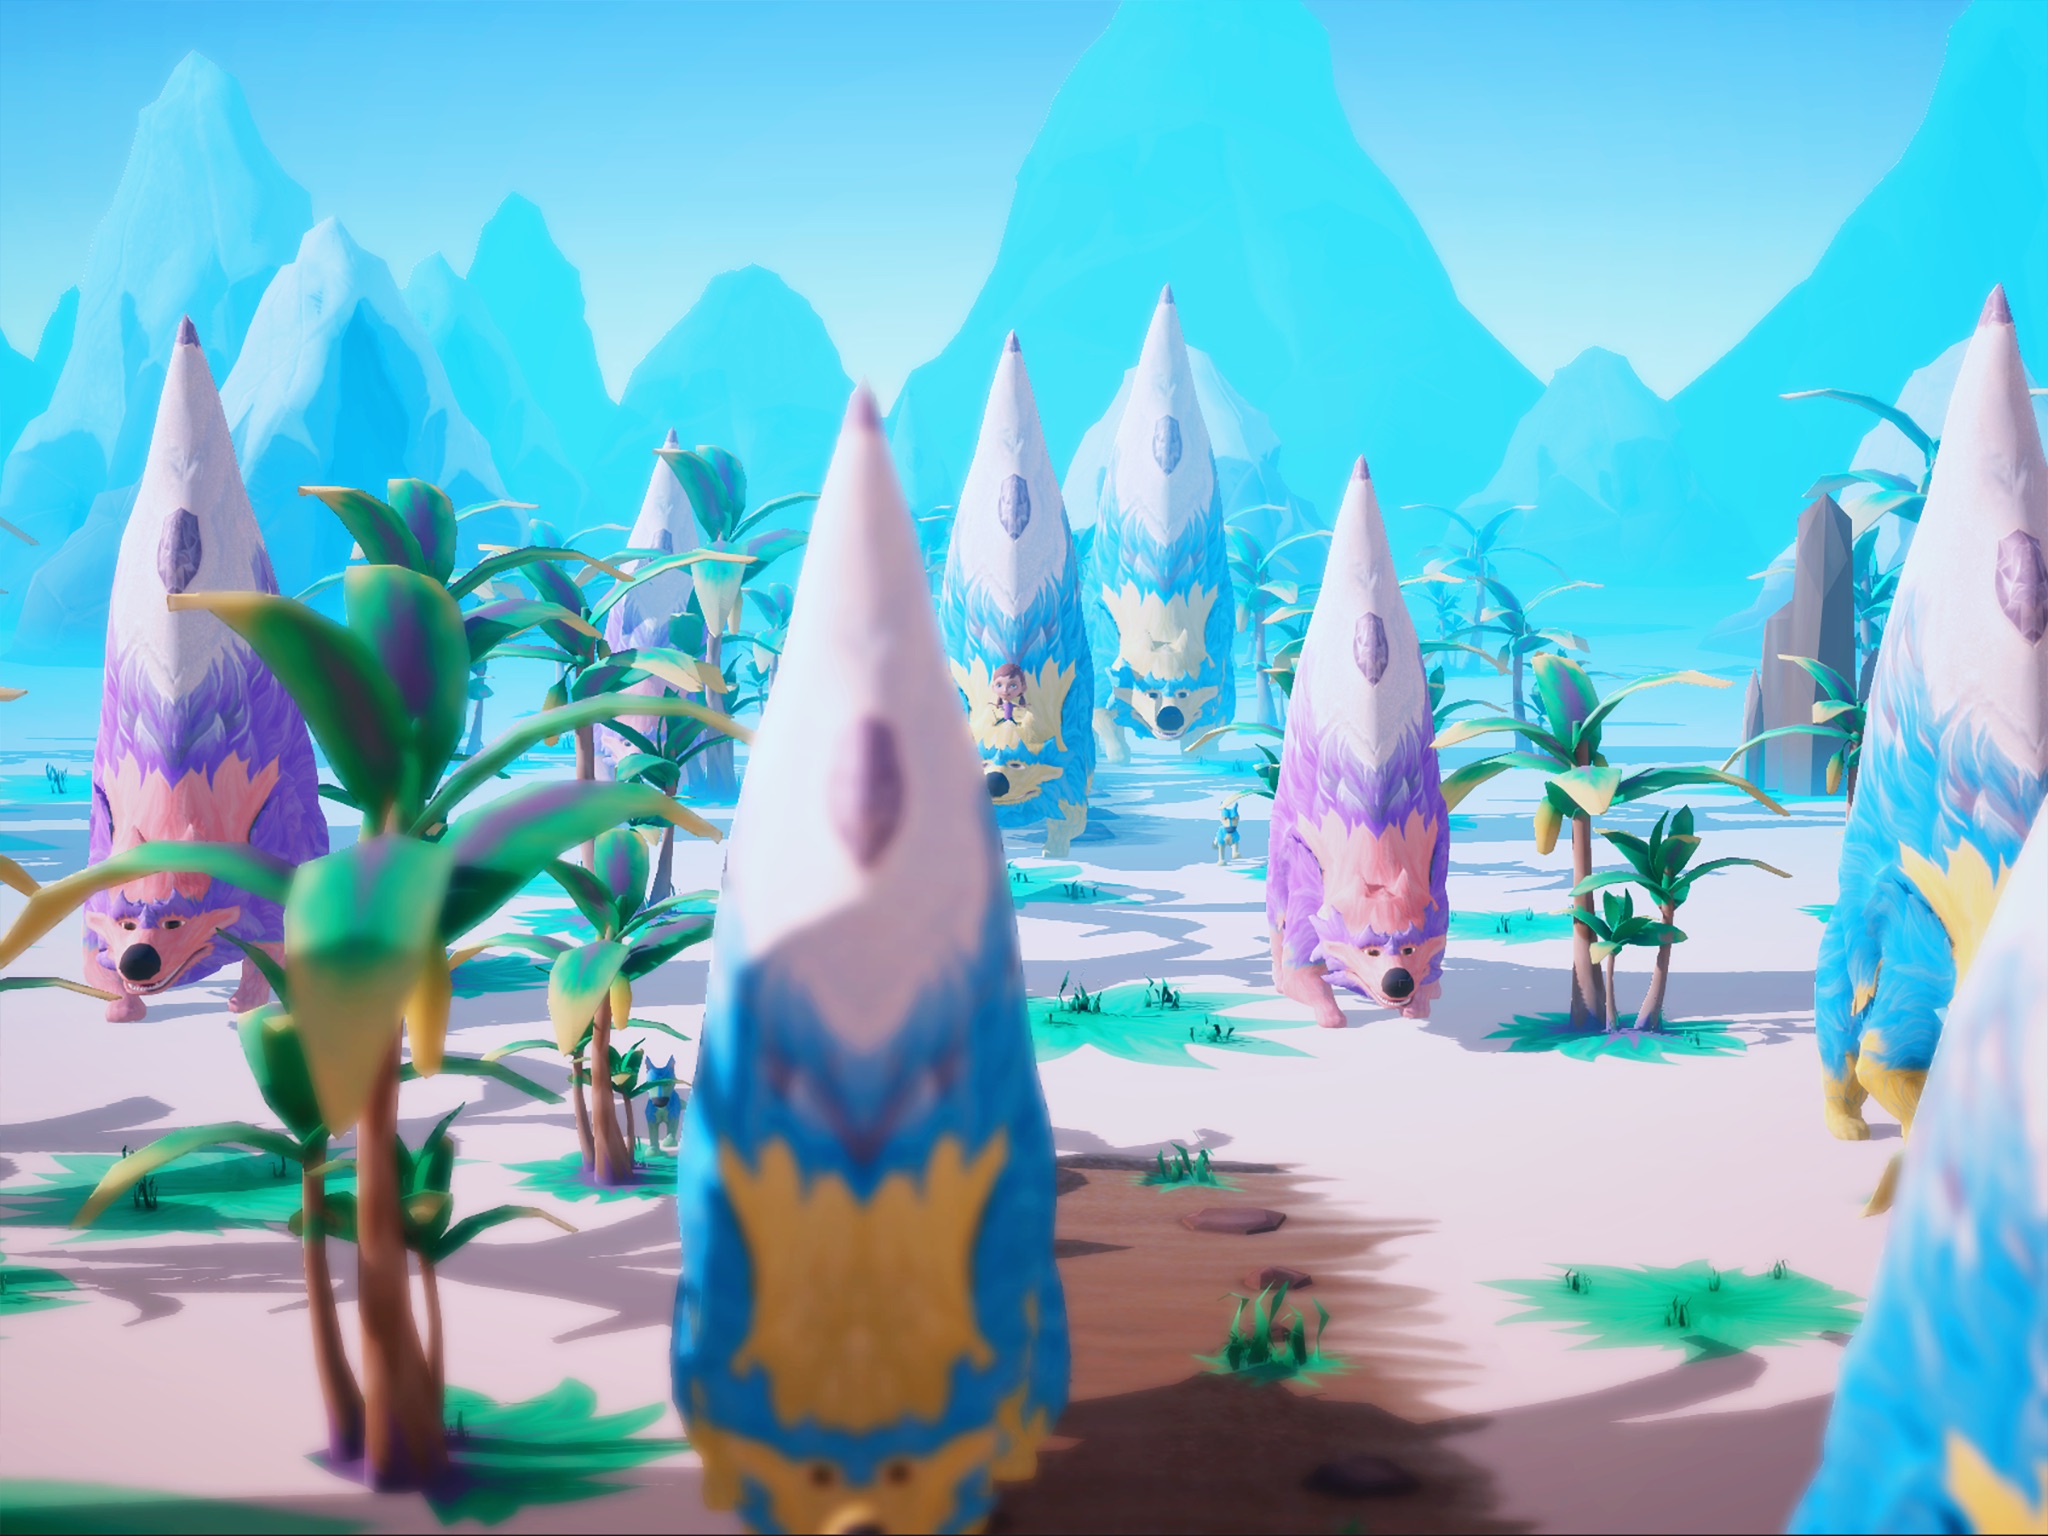 Rumble's Quest screenshot 4